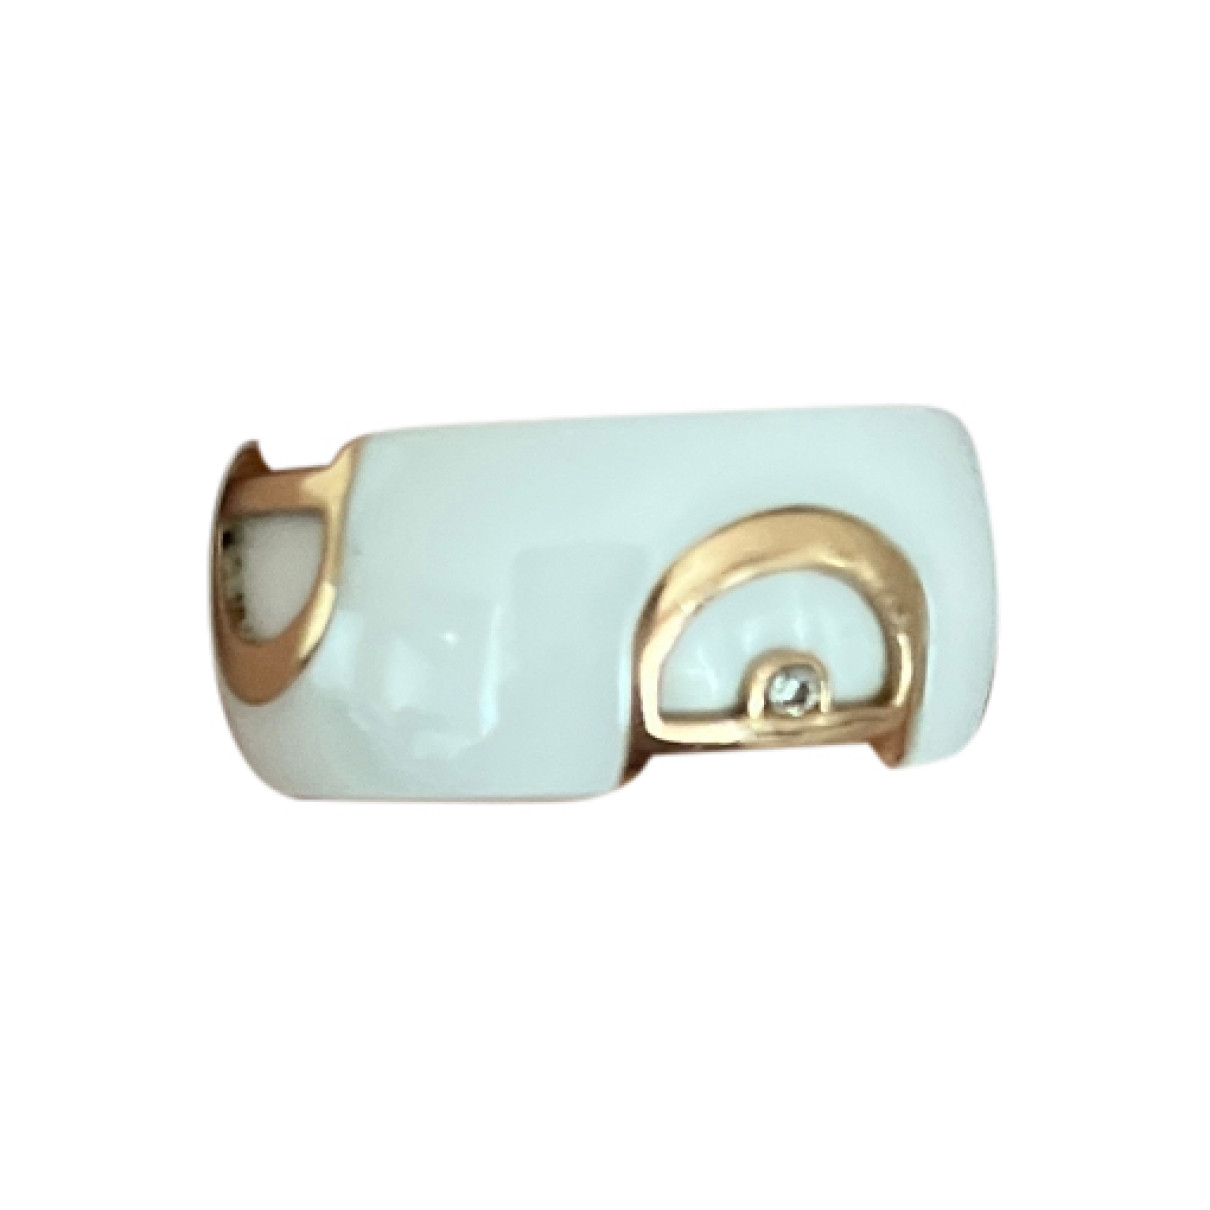 jewellery Damiani rings for Female Ceramic 53 EU. Used condition